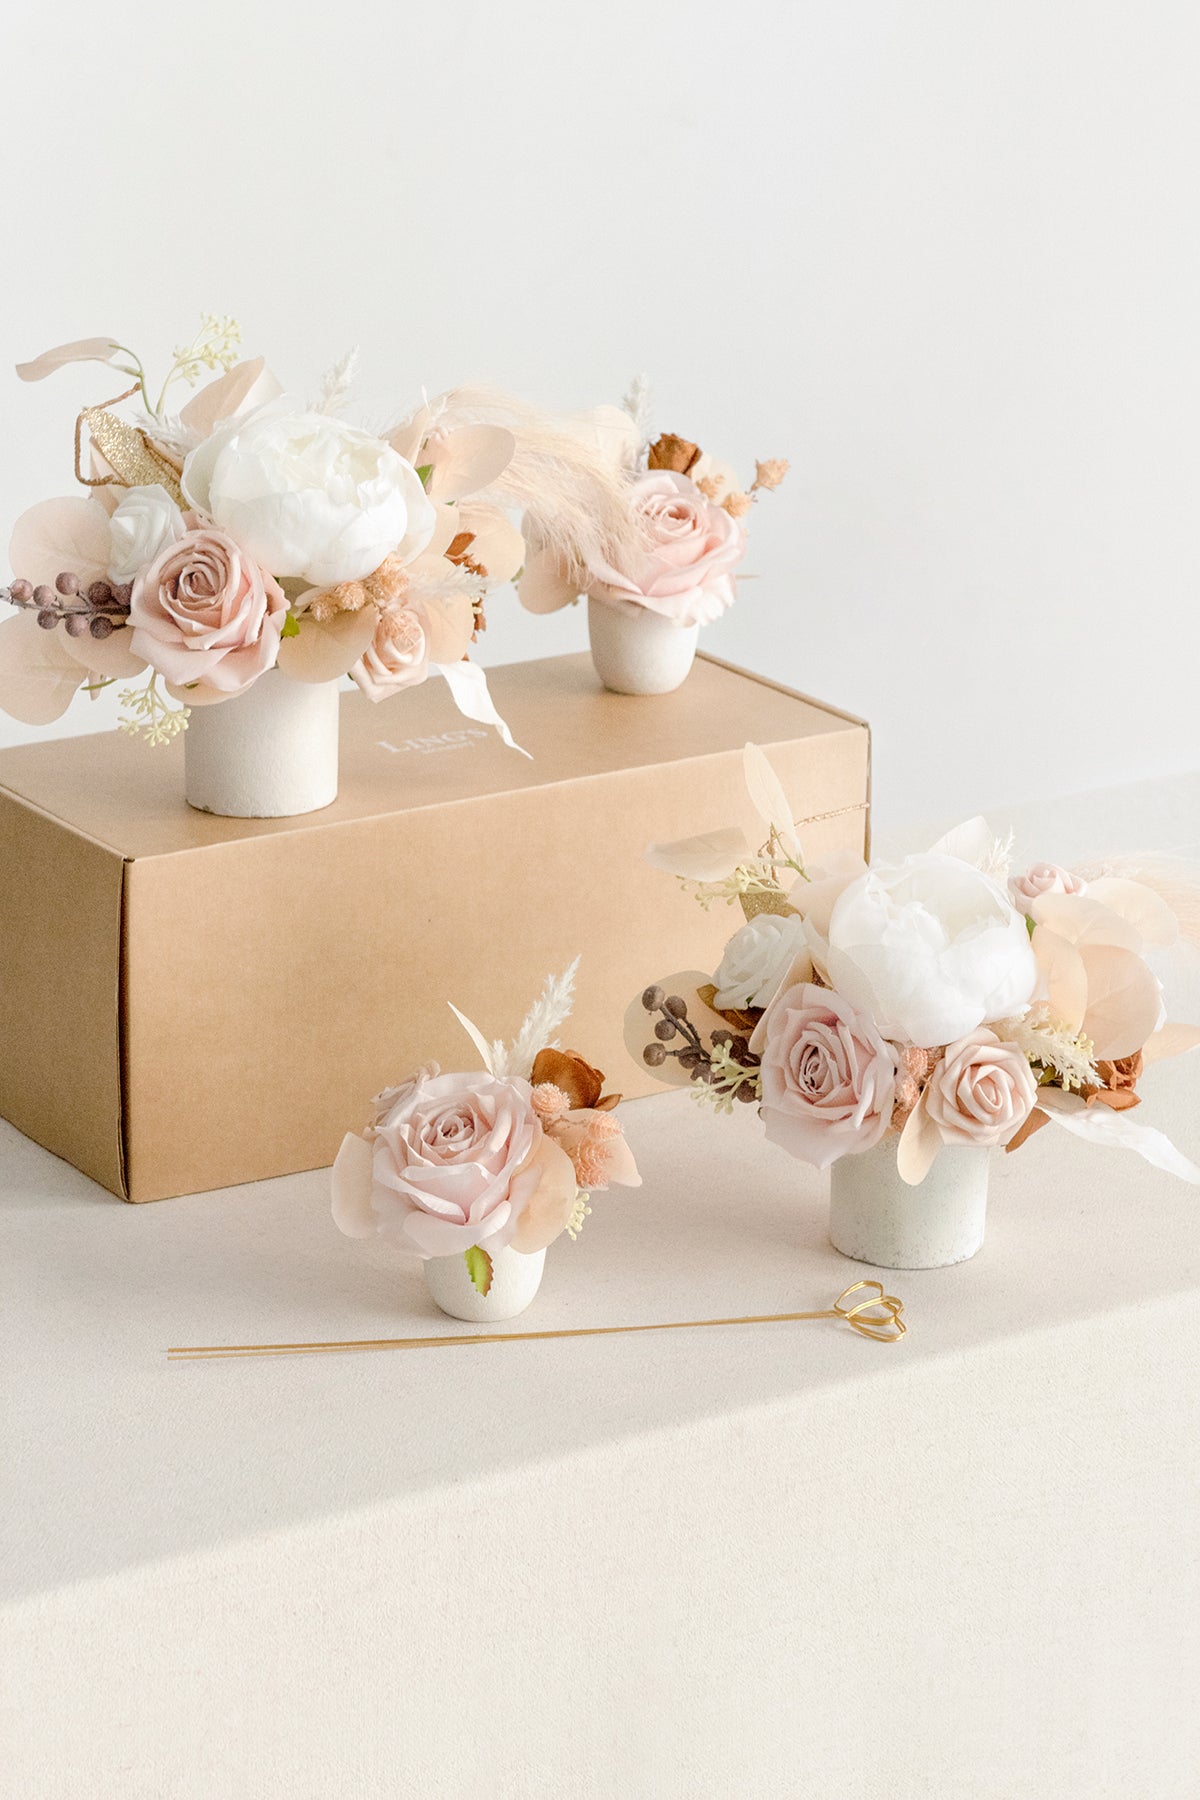 Assorted Floral Centerpiece Set in White & Beige